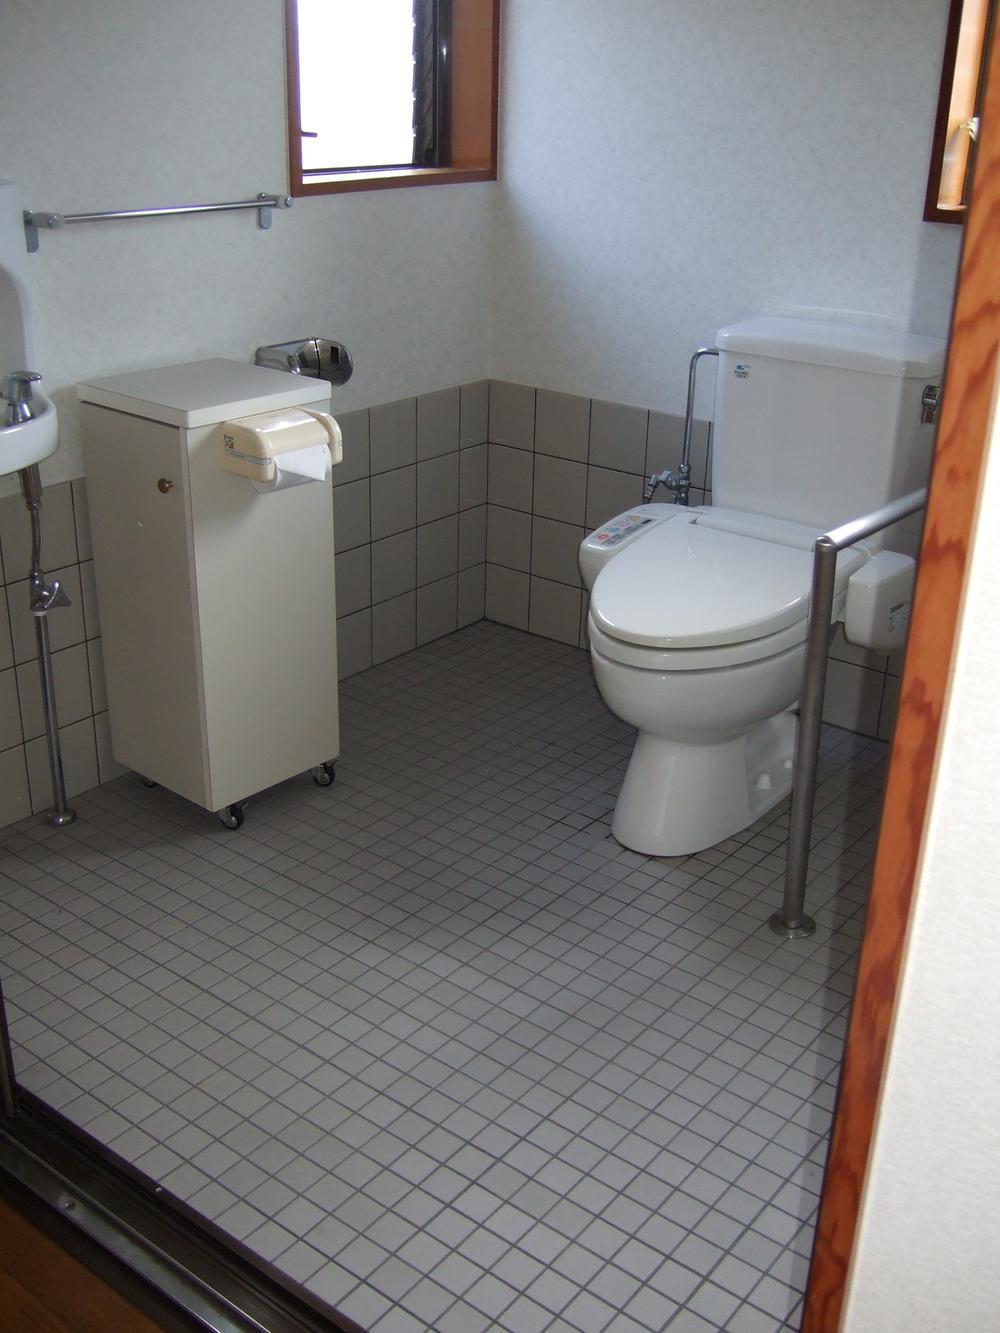 Toilet. Spacious barrier-free, Toilet with warm water washing toilet seat